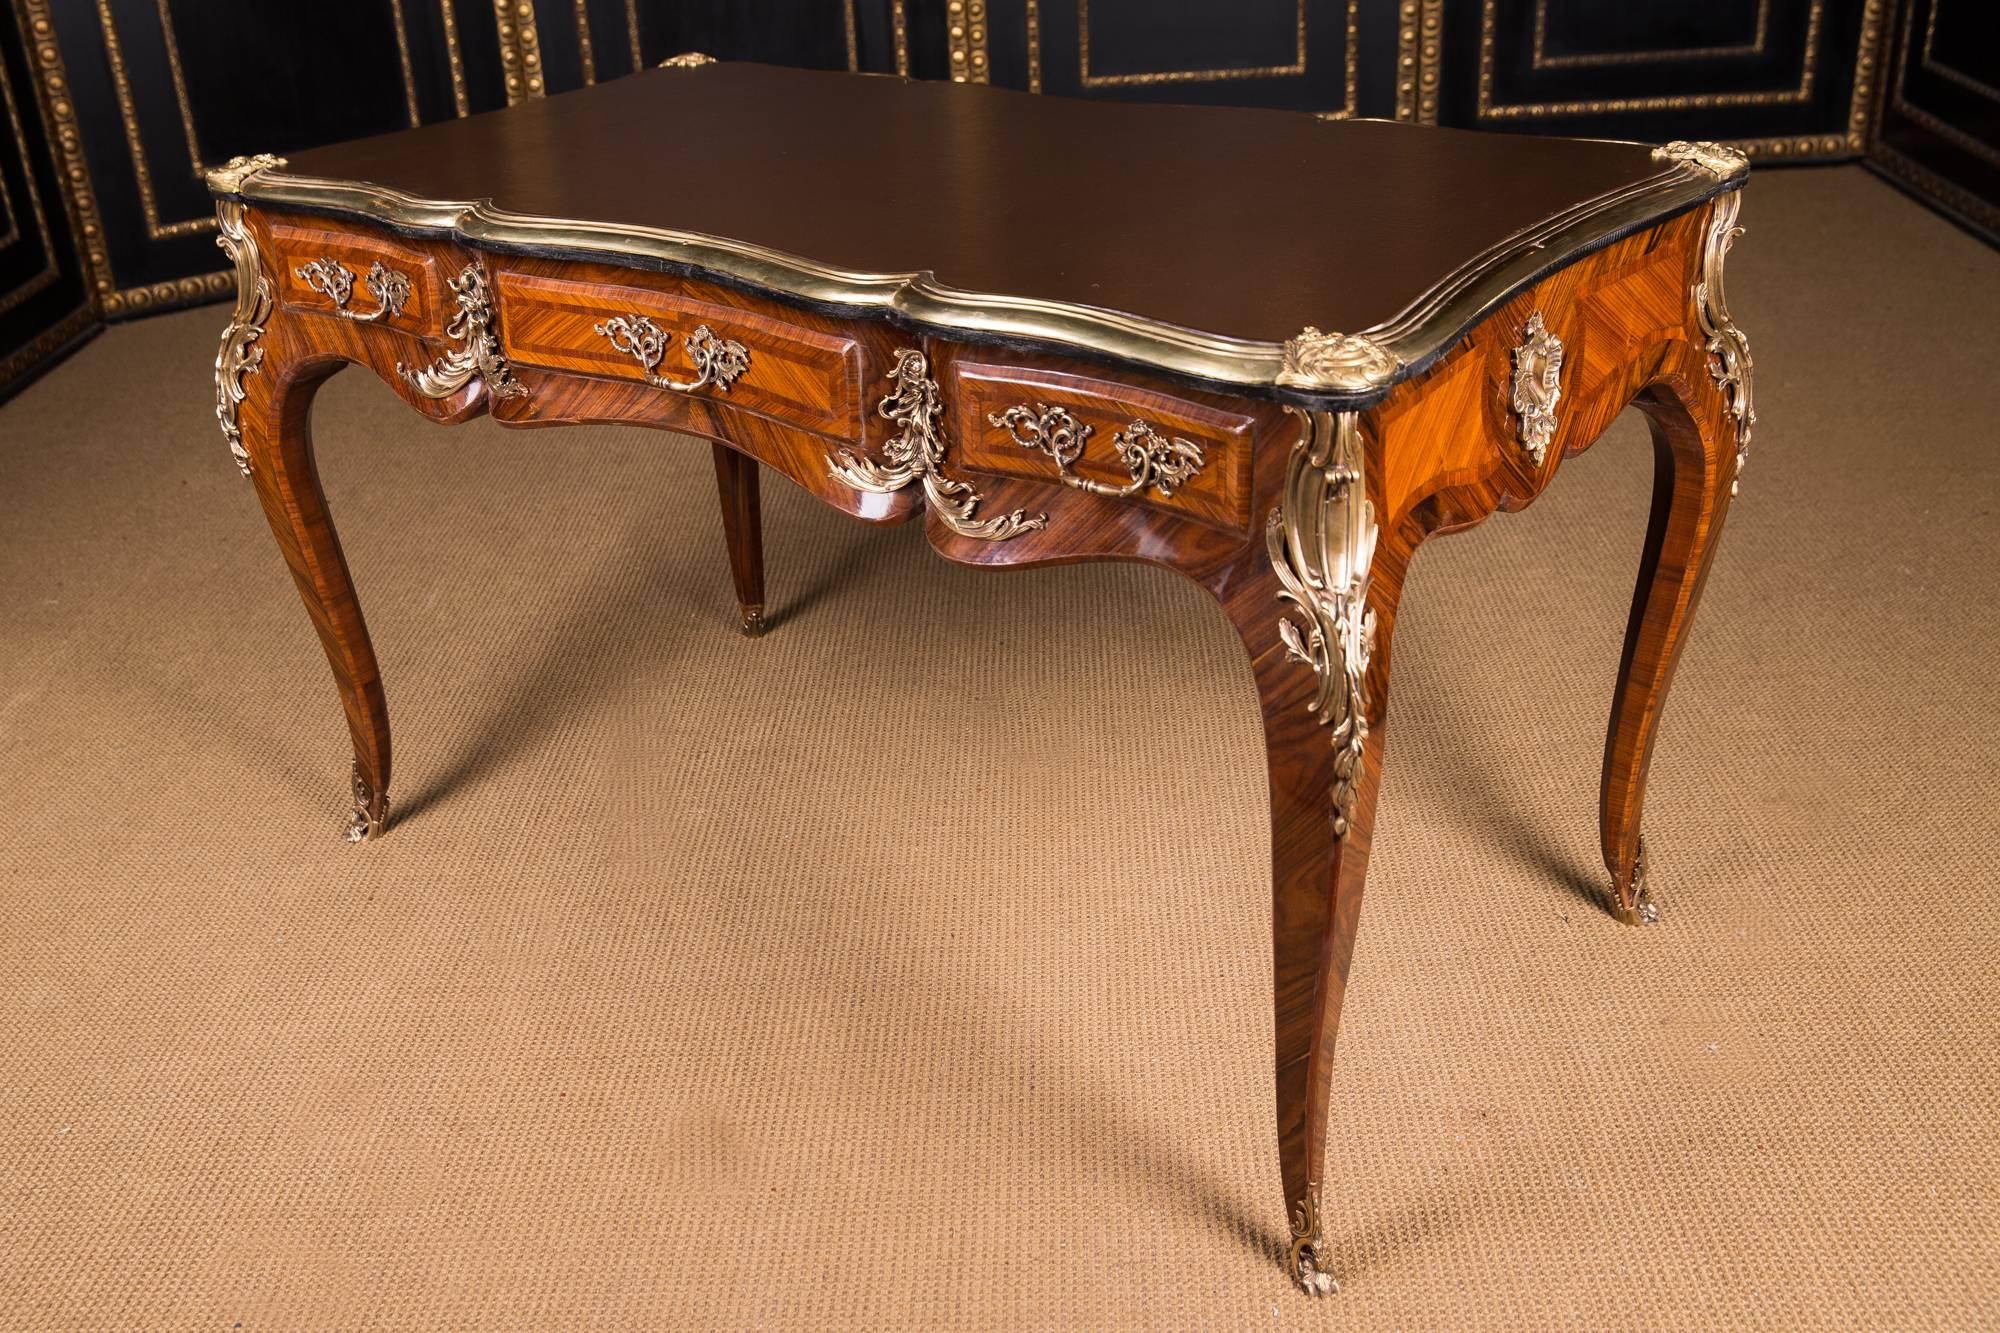 20th Century French Desk Bureau Plat in the Louis XV Style Bois-Satiné Veneer 5